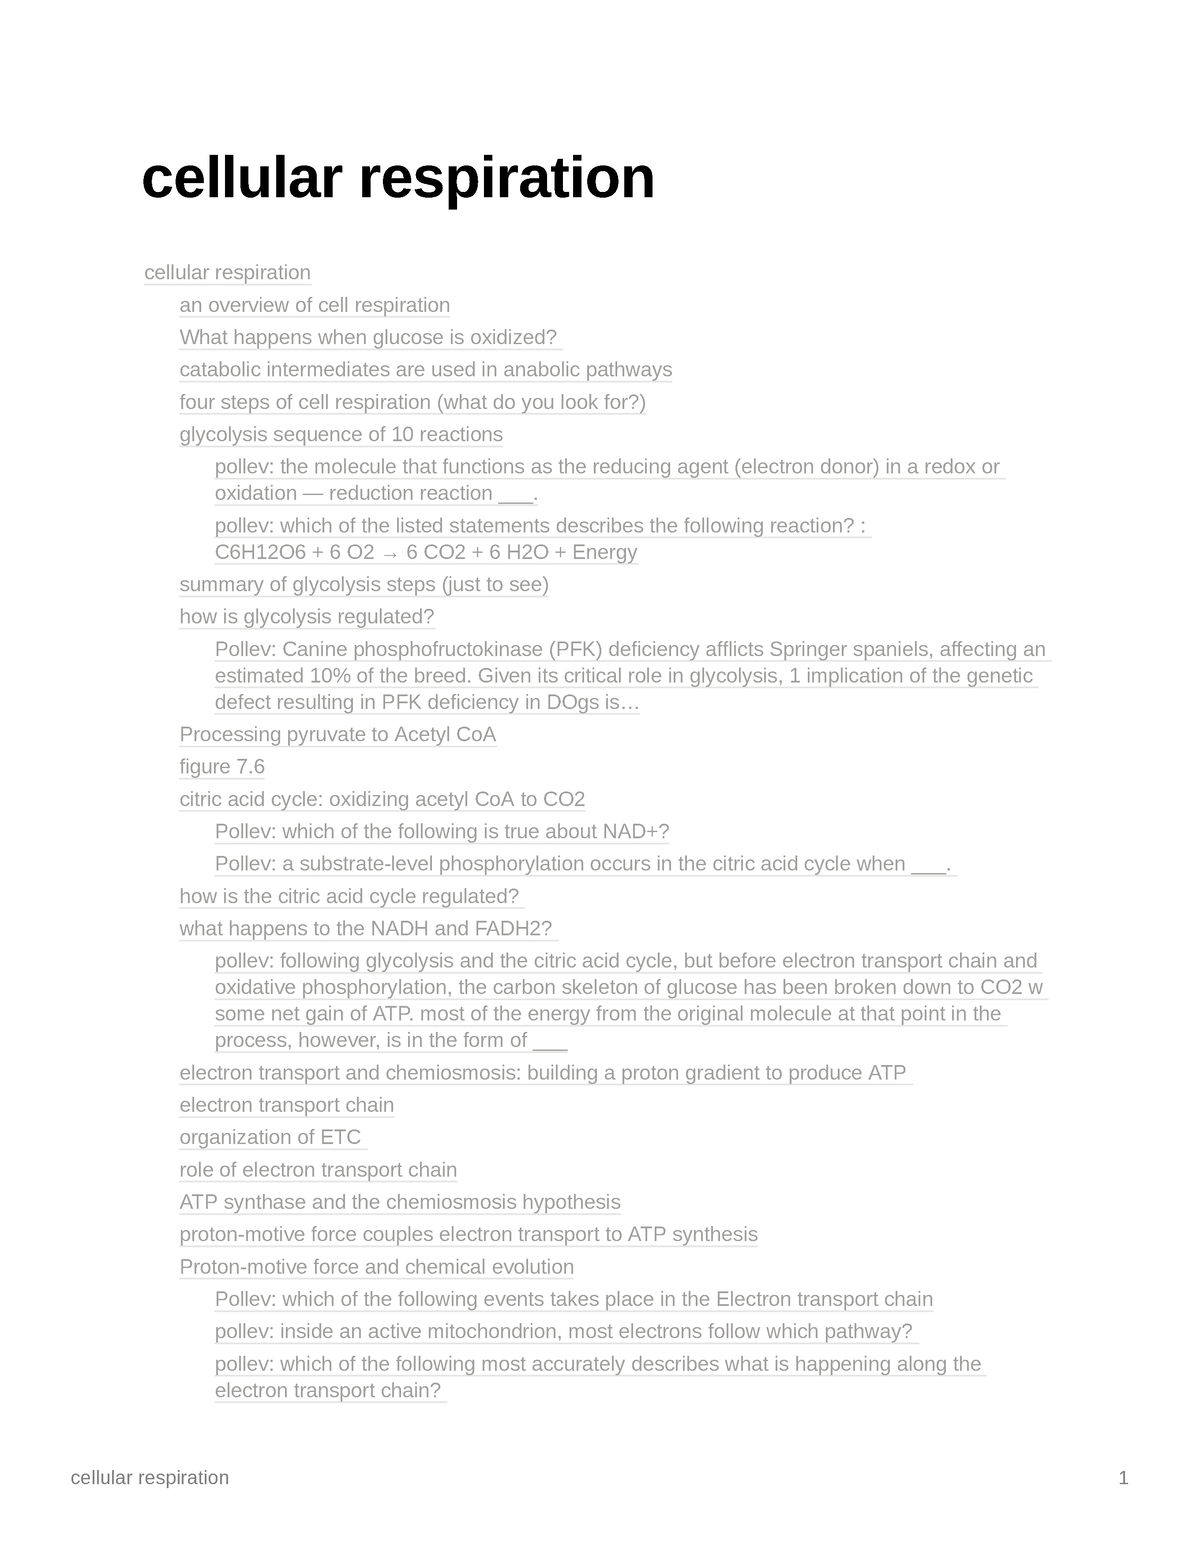 my cellular respiration essay